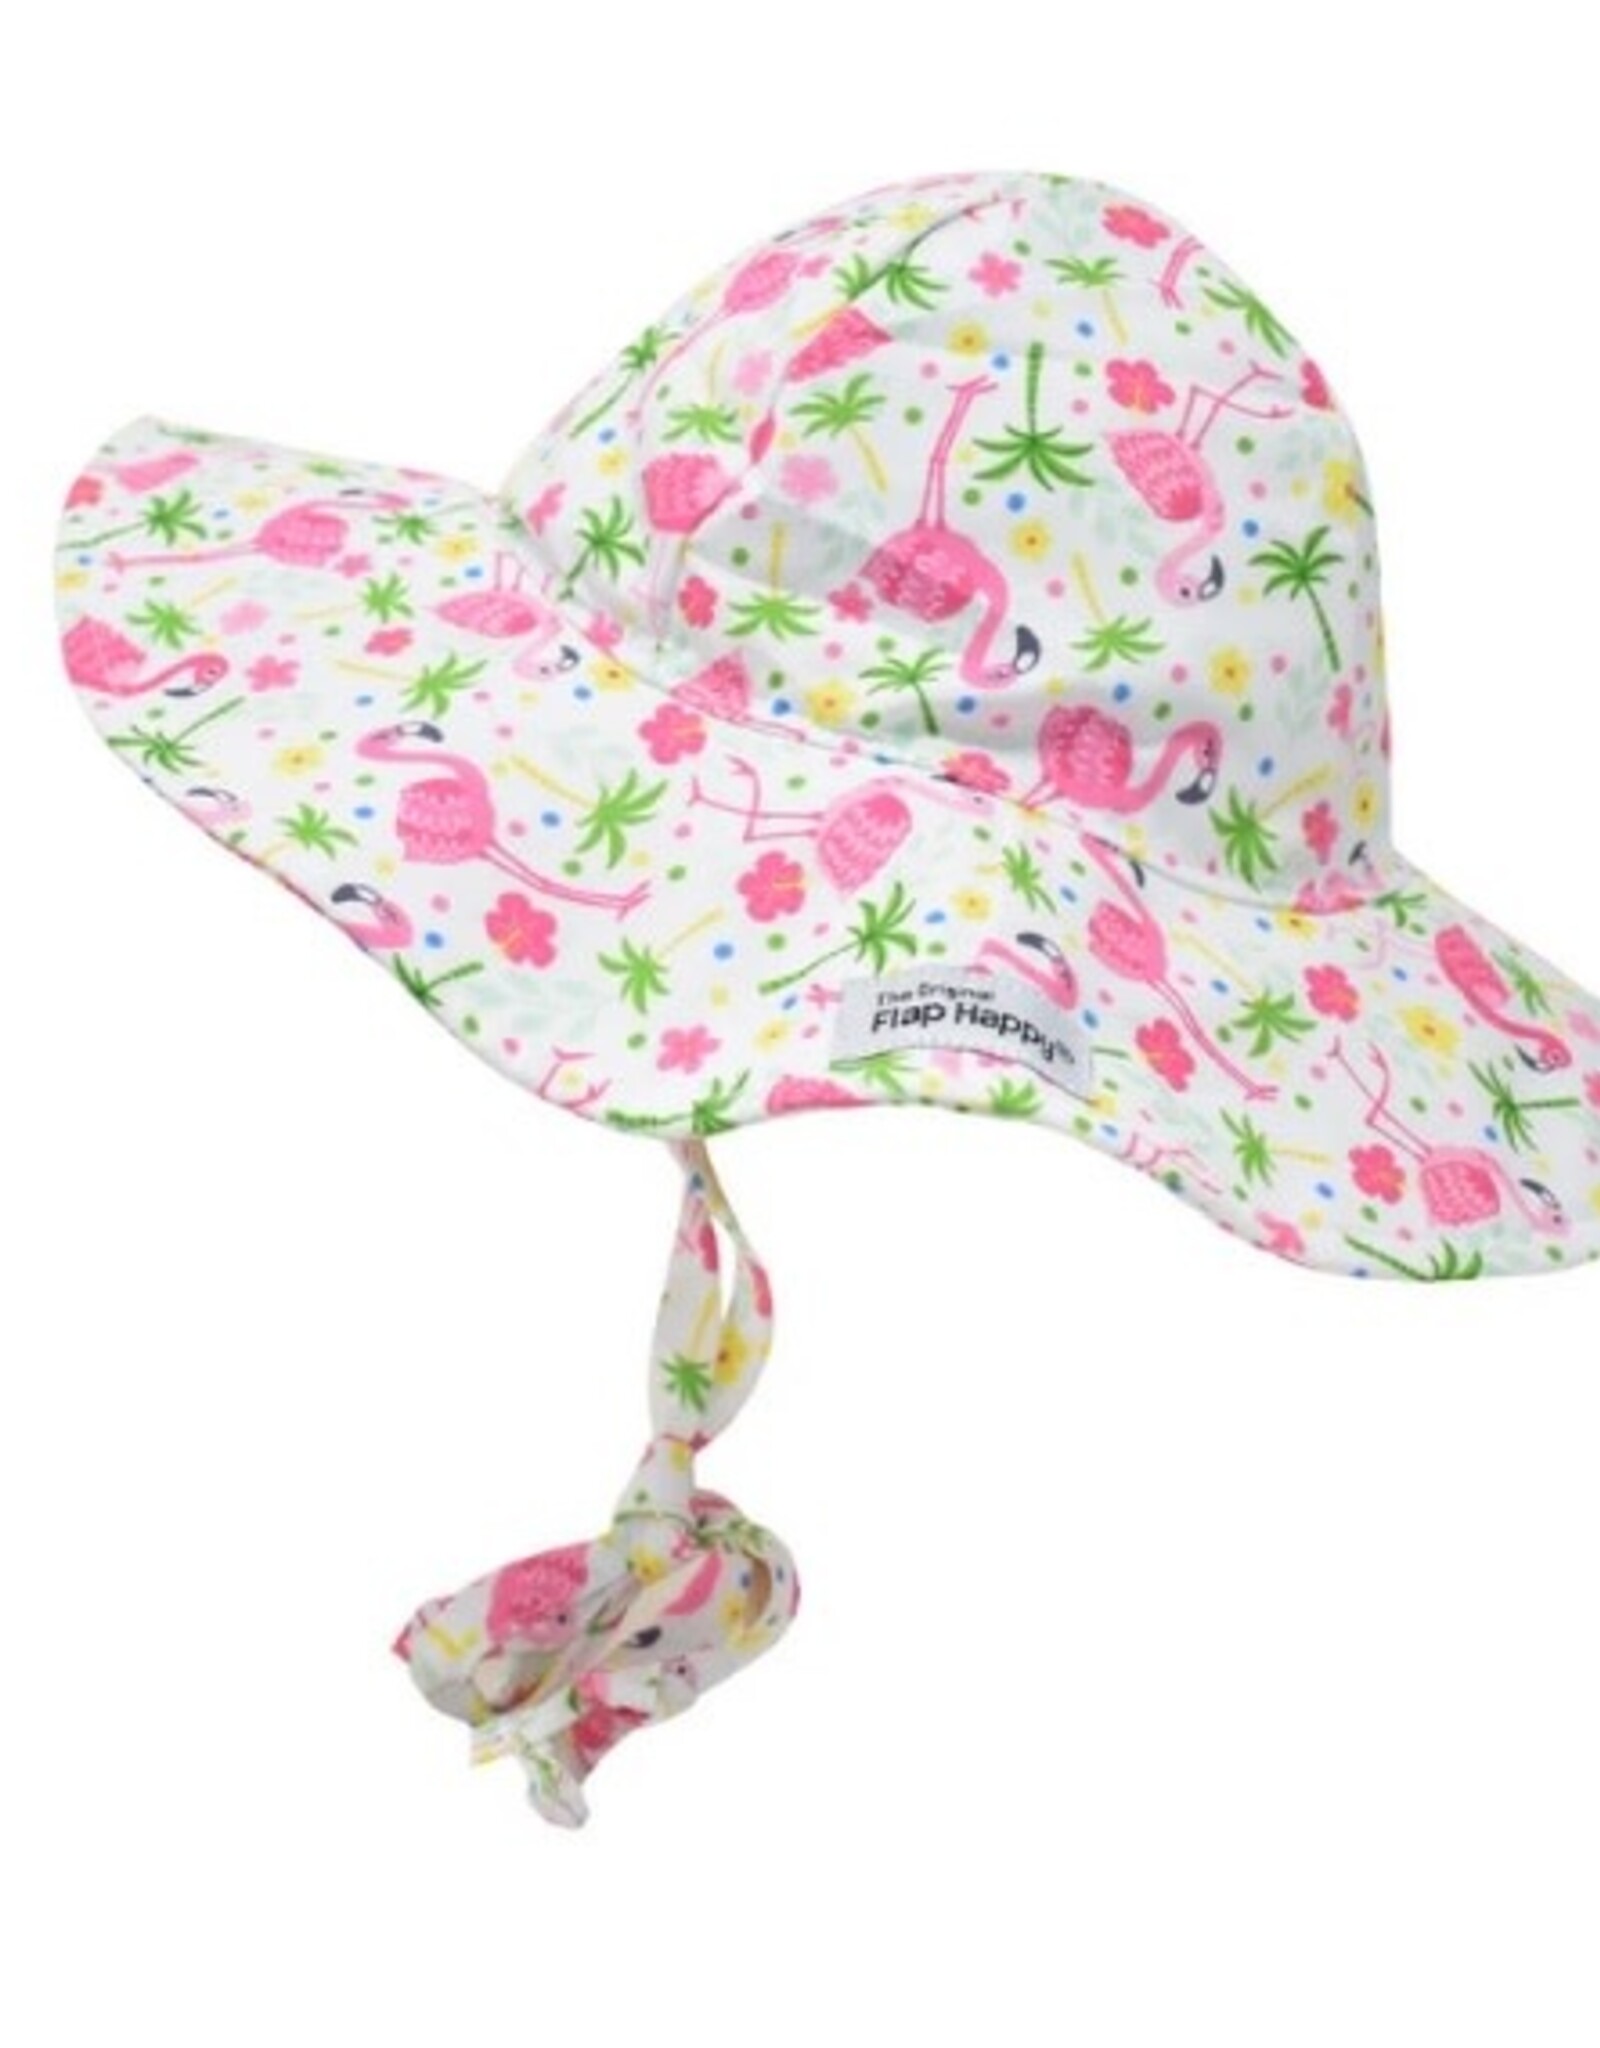 Flap Happy Flamingo Party Hat